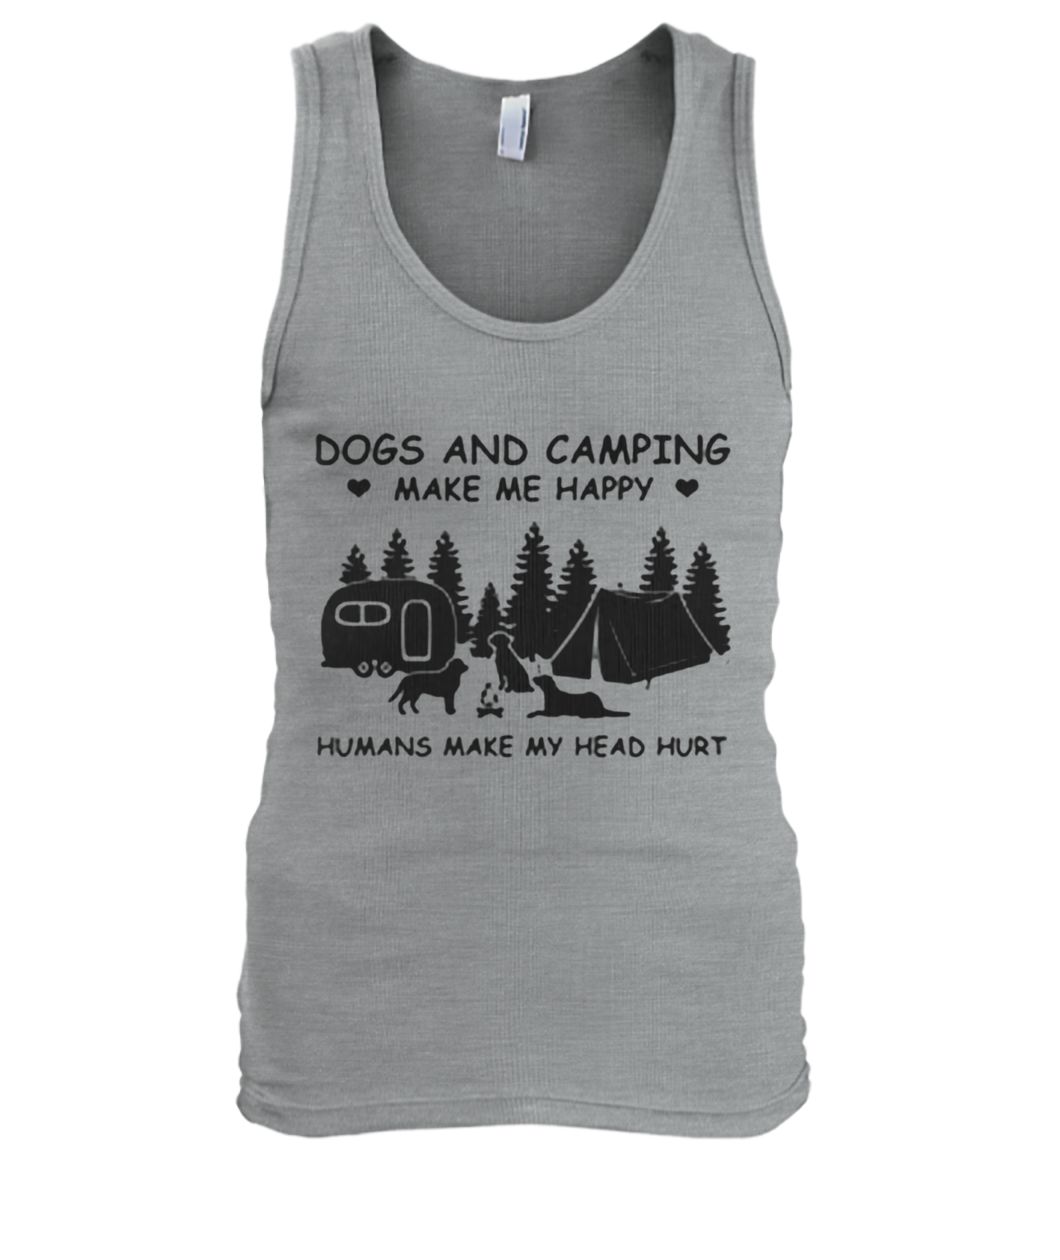 Dog and camping make me happy humans make my head hurt men's tank top